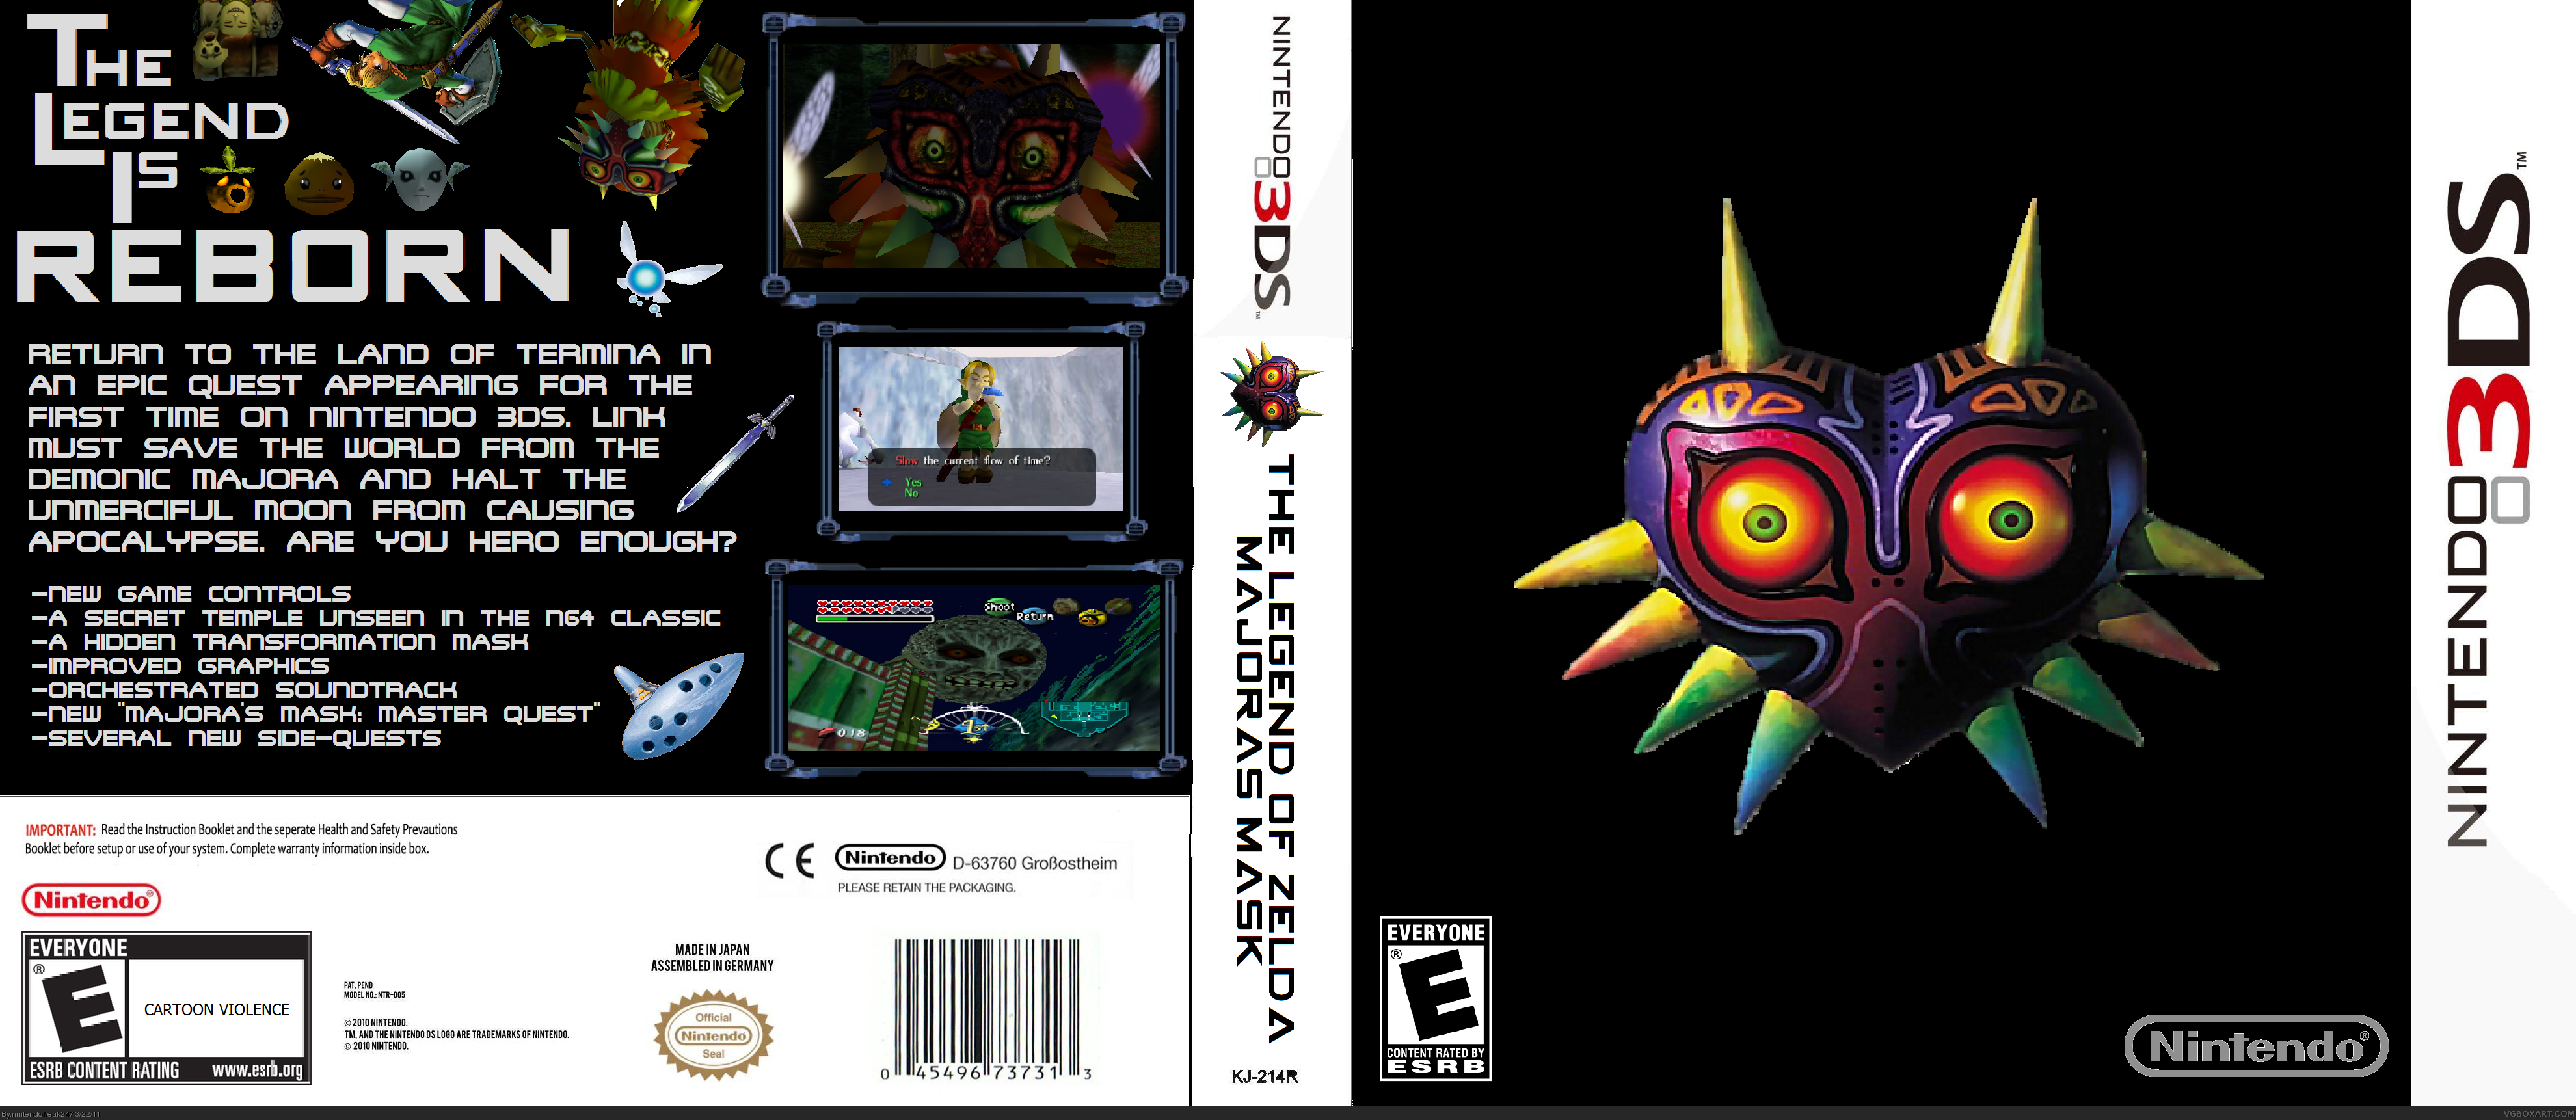 The Legend of Zelda Majora's Mask box cover